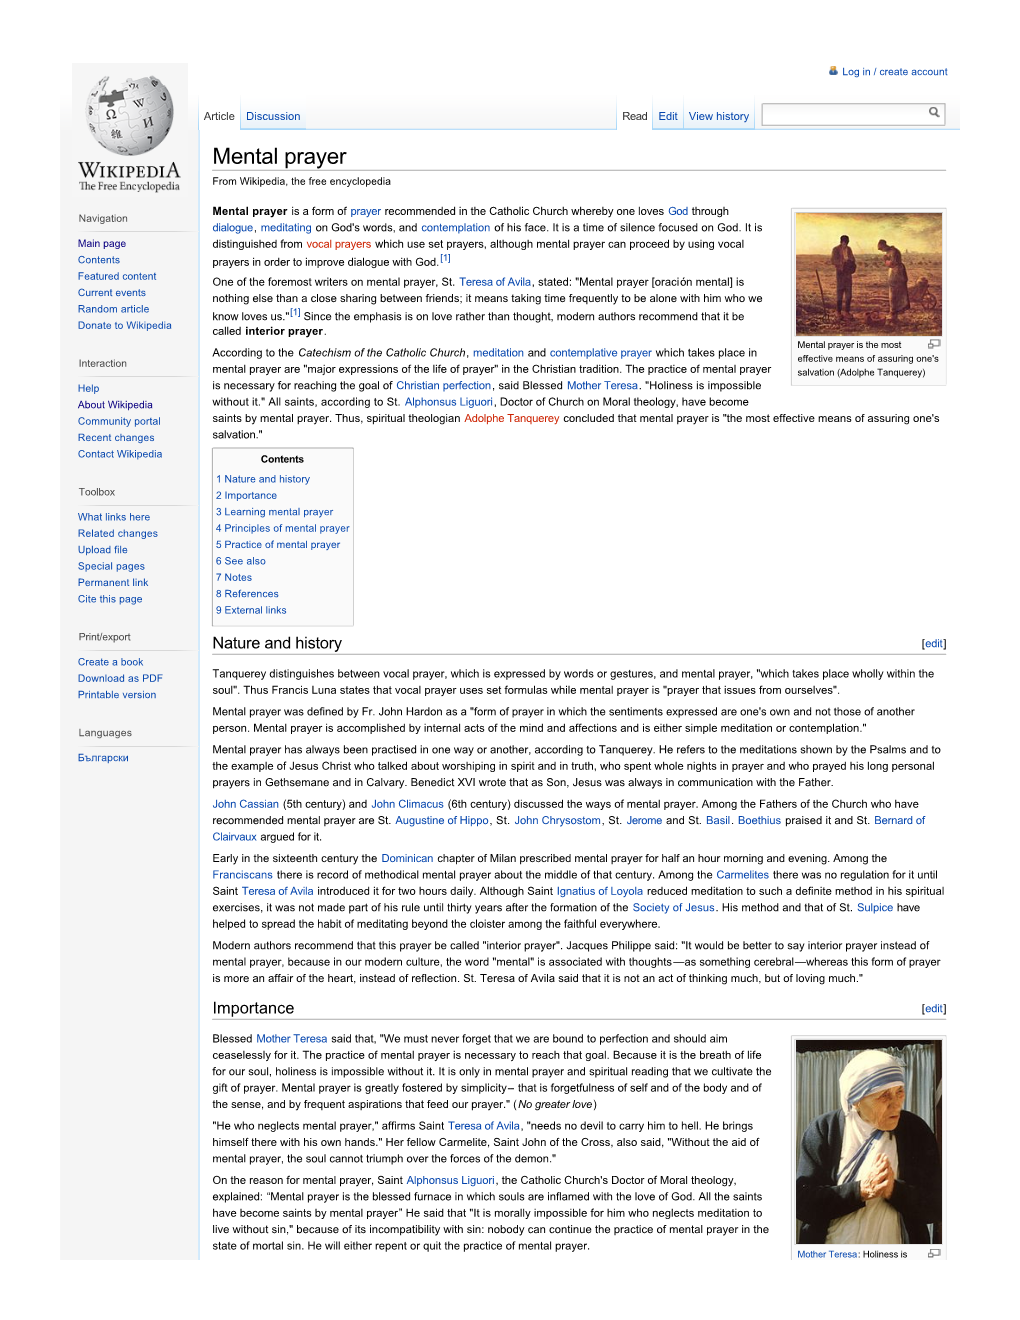 Mental Prayer from Wikipedia, the Free Encyclopedia